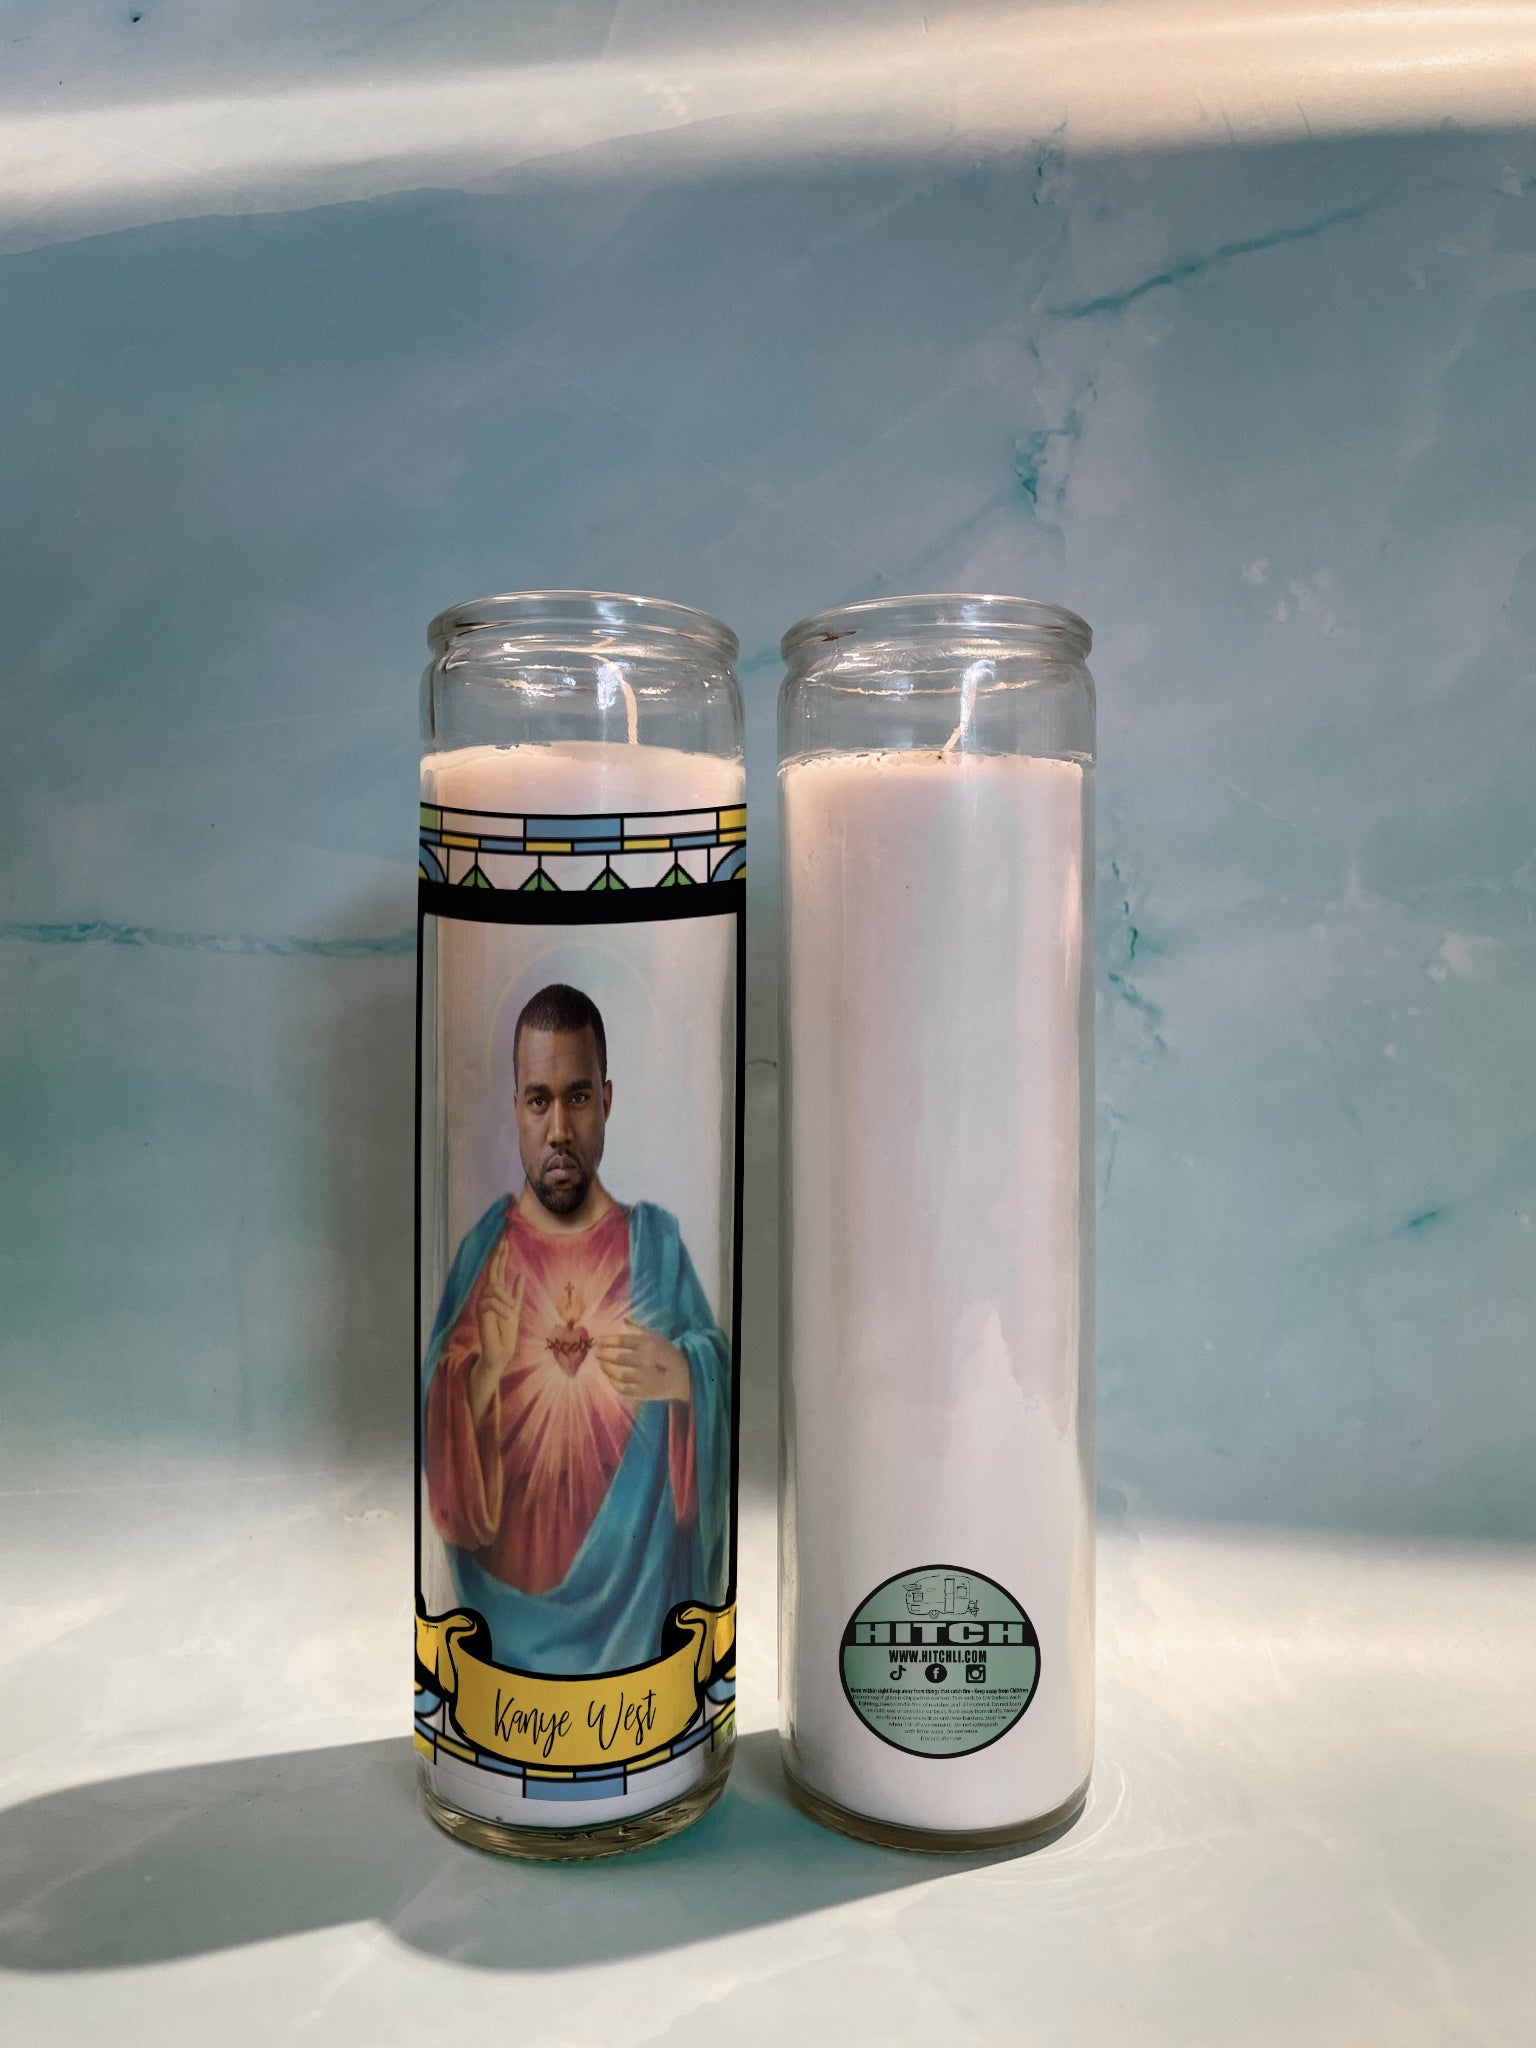 Kanye West Original Prayer Candle